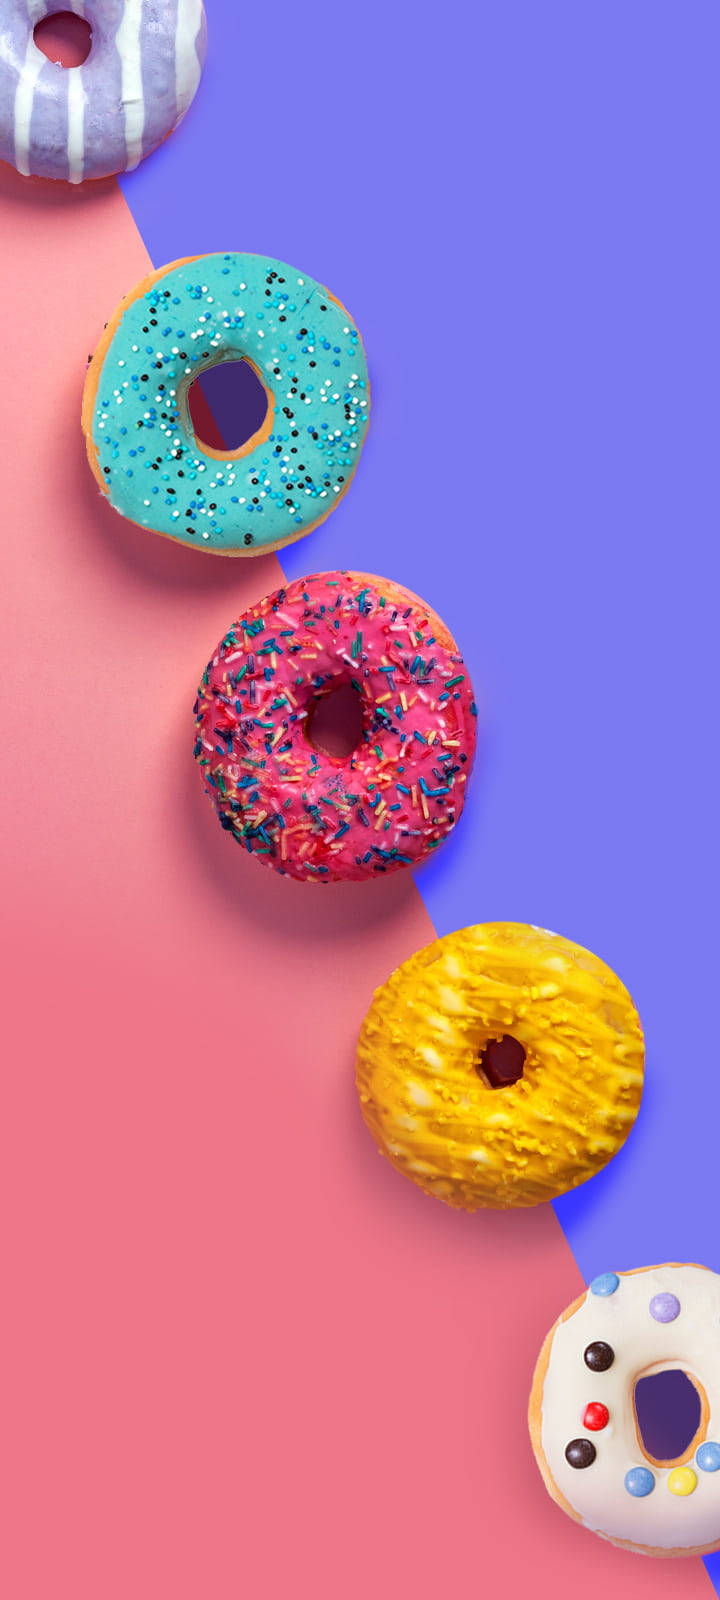 Pontose Entalhes De Donuts Coloridos Deliciosos. Papel de Parede